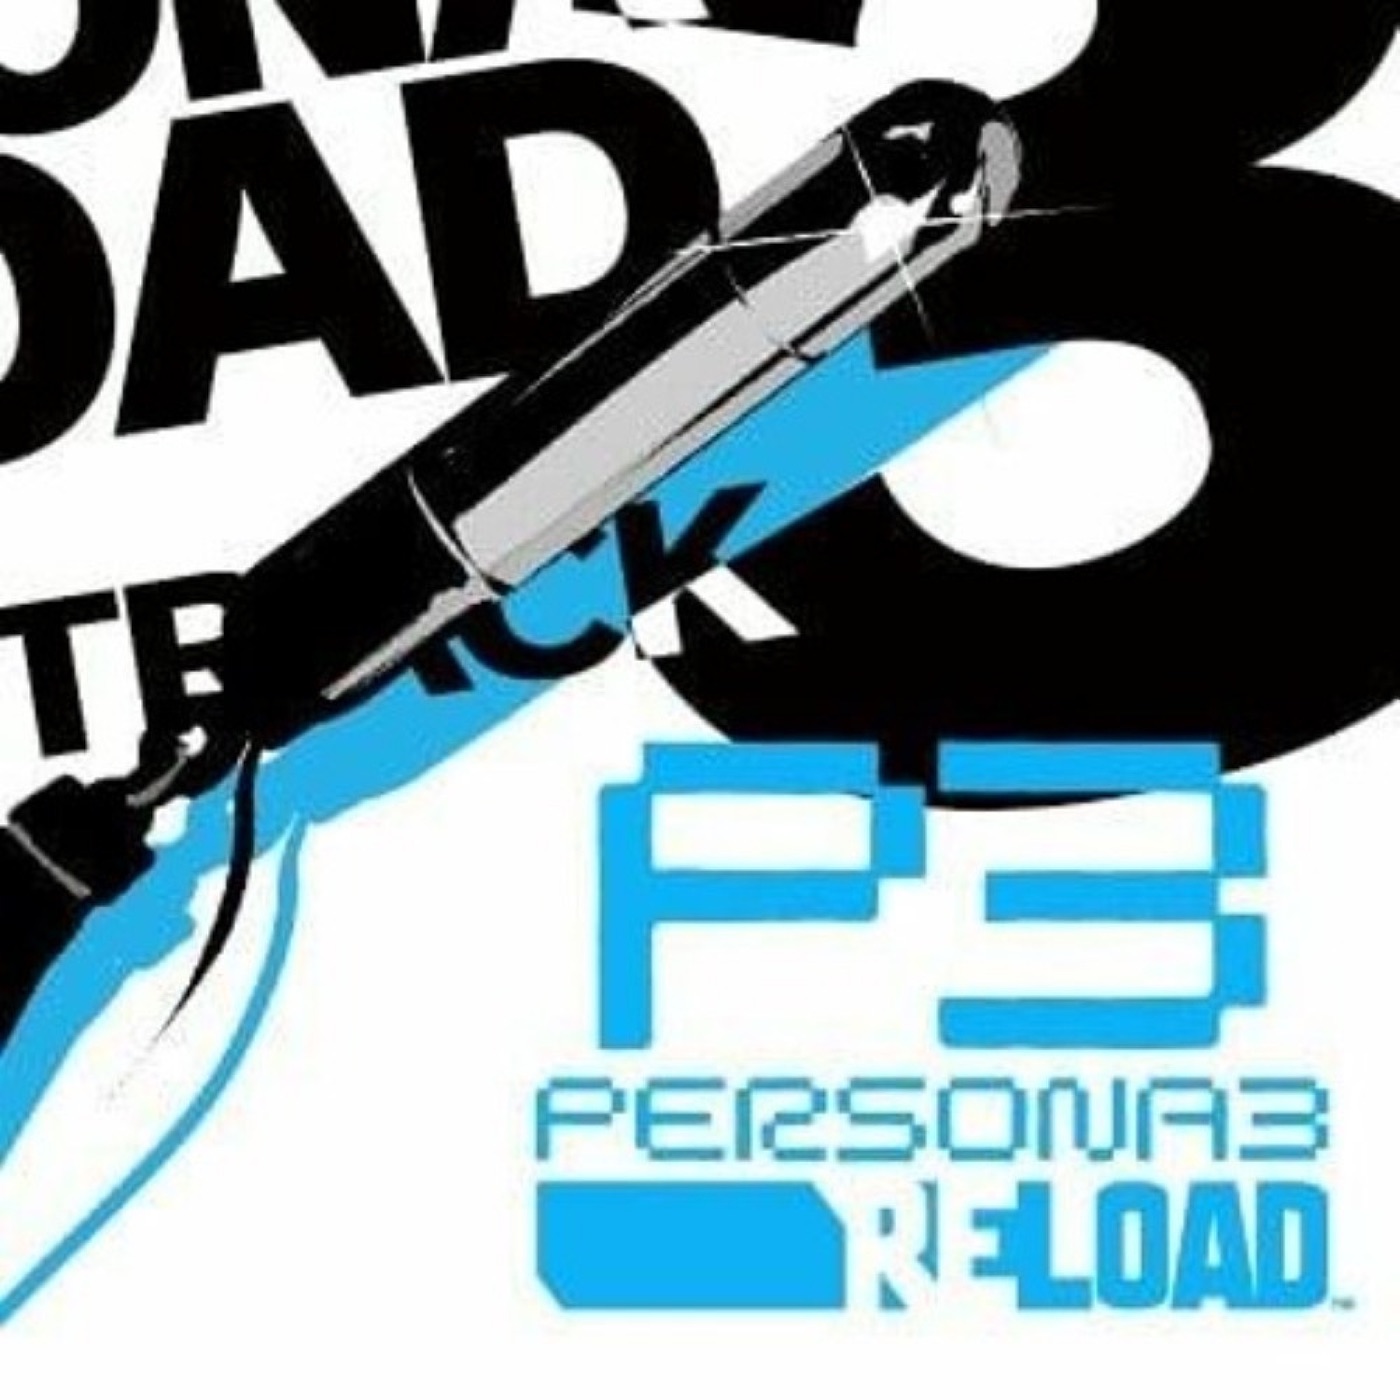 Persona 3 Reload (Original Game Soundtrack), Pt. 2 by ziodyne